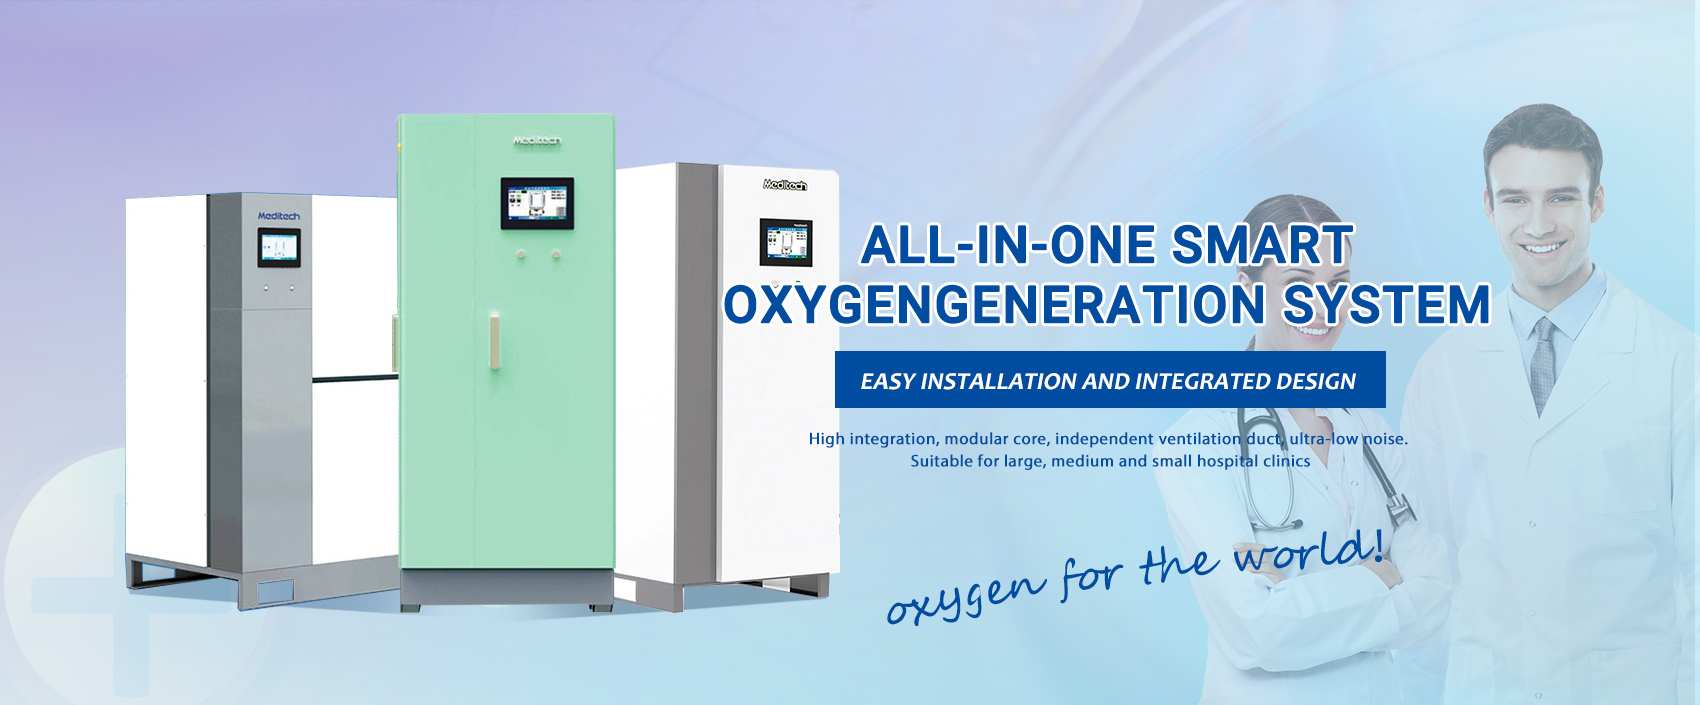 Bonke-in-nye Systems Oxygen Medical